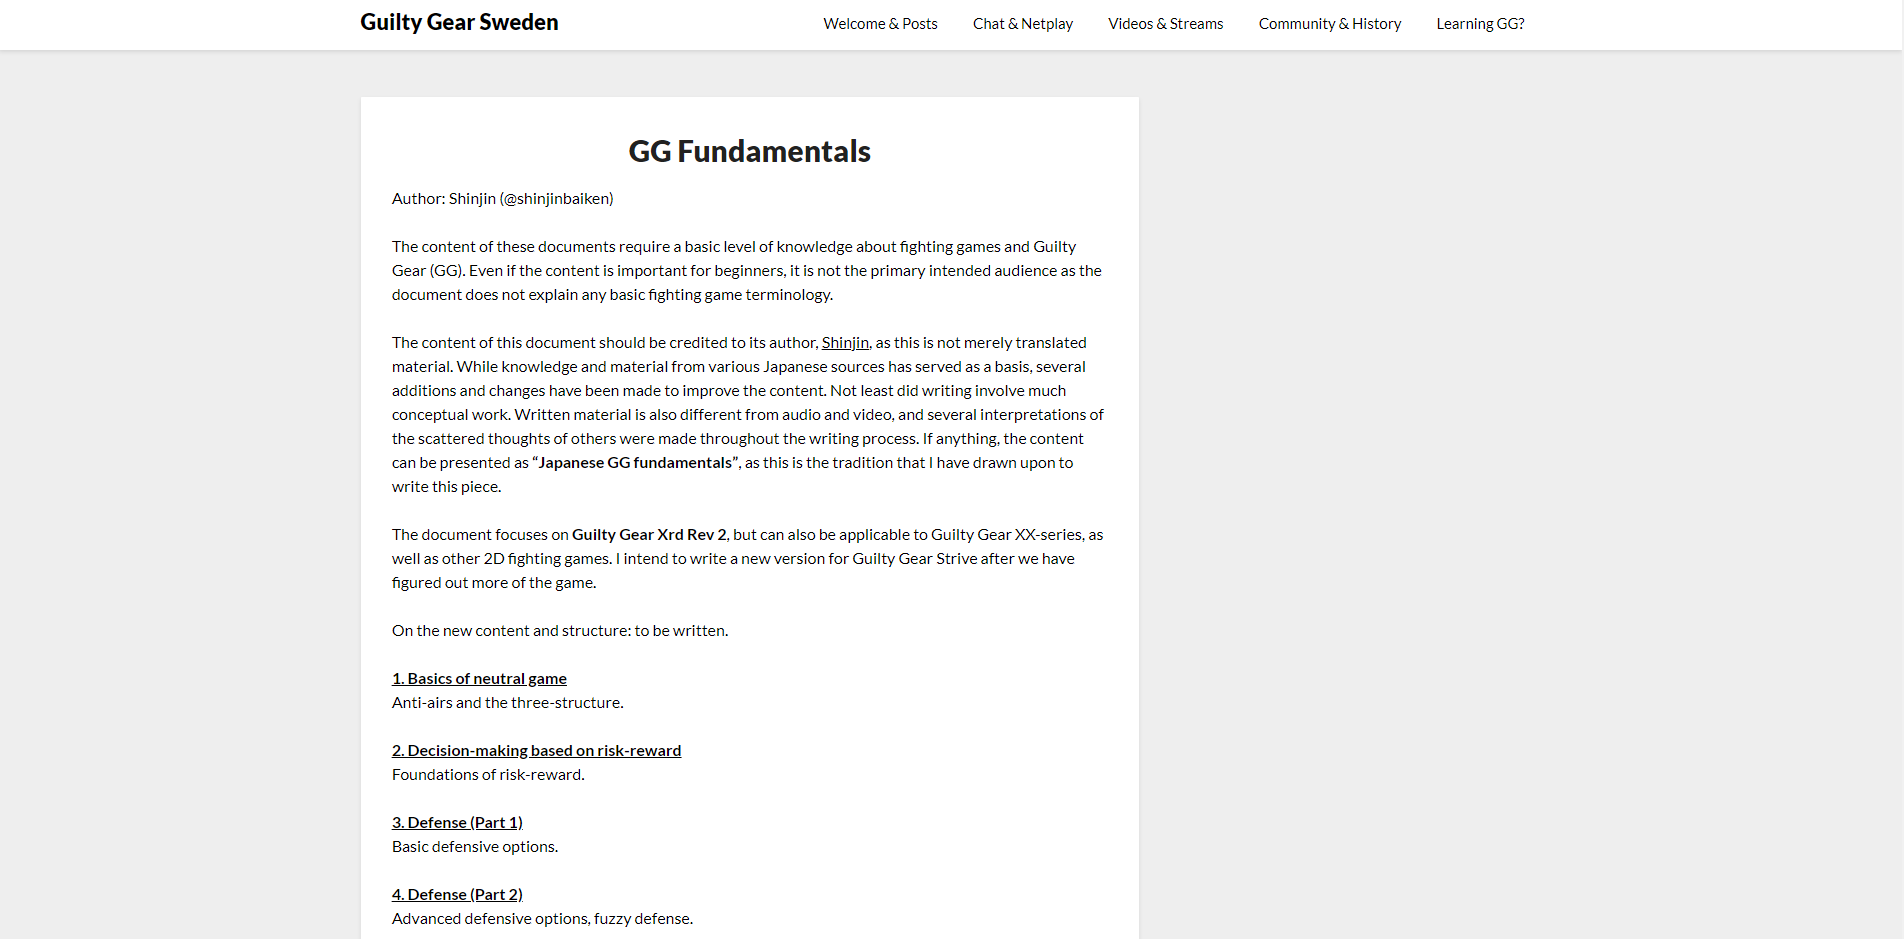 GG Fundamentals - GG Sweden